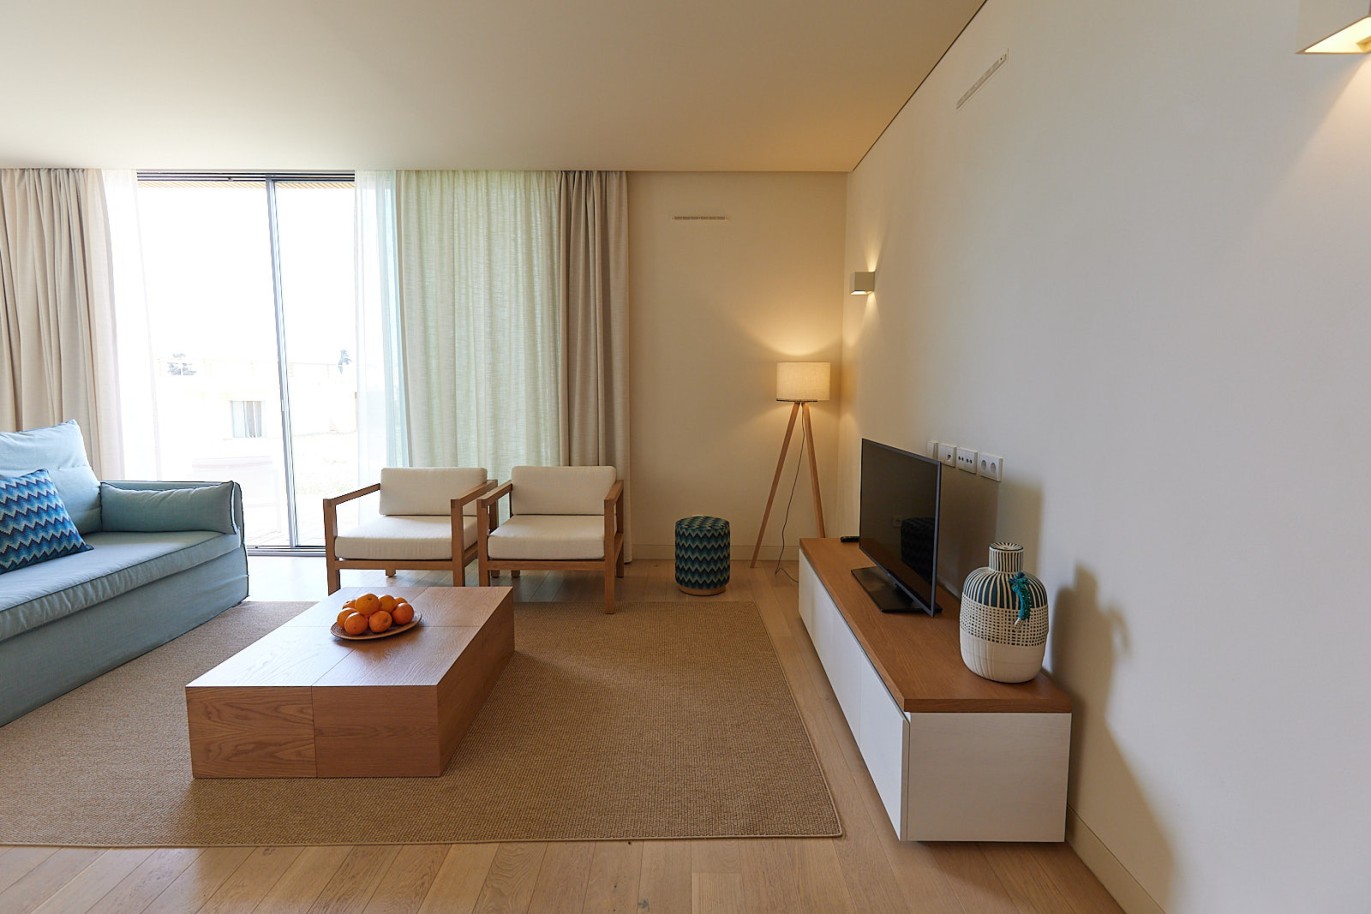 2 bedroom apartment in resort, for sale in Porches, Algarve_228949